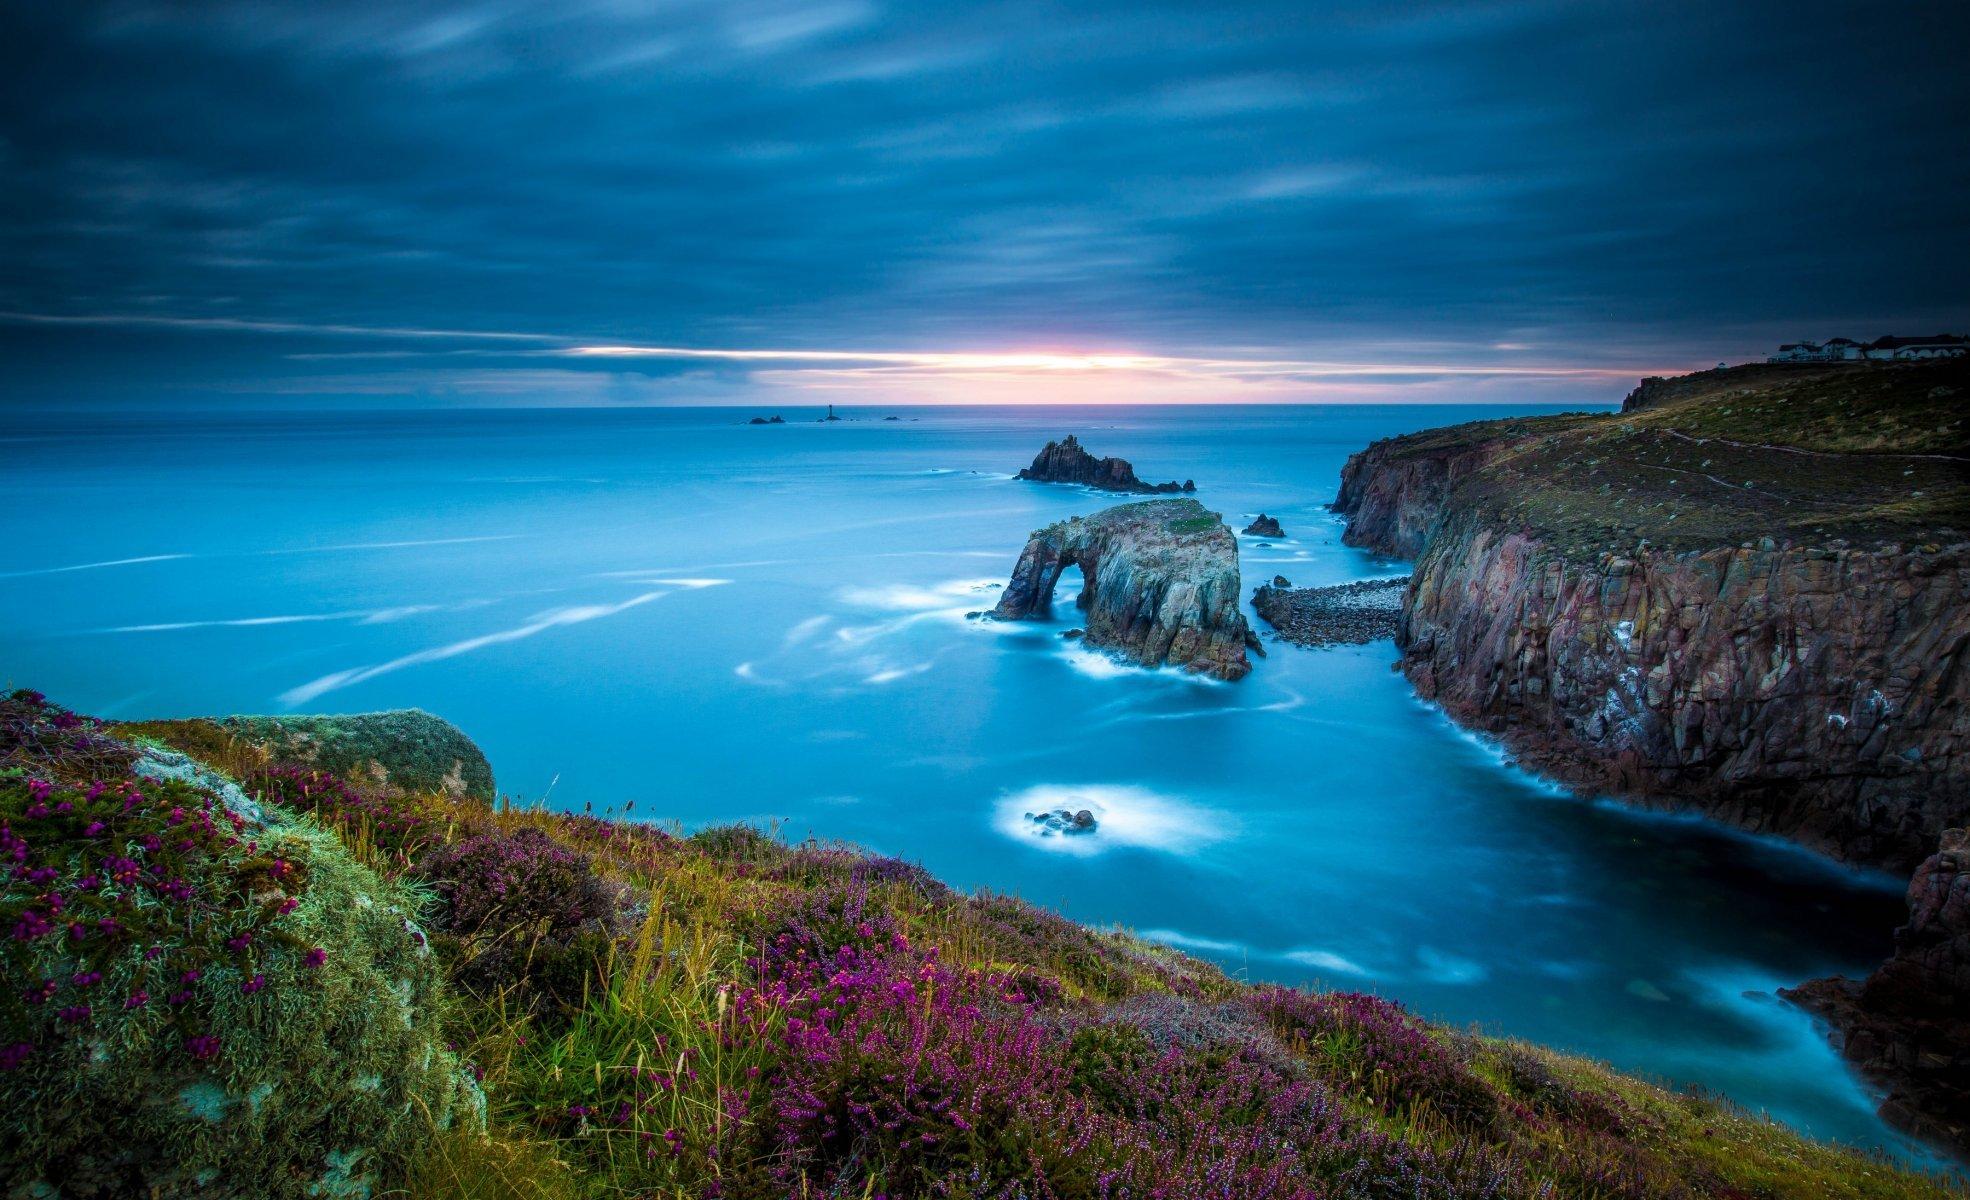 land's end cornwall england celtic sea cape land's end coast rock